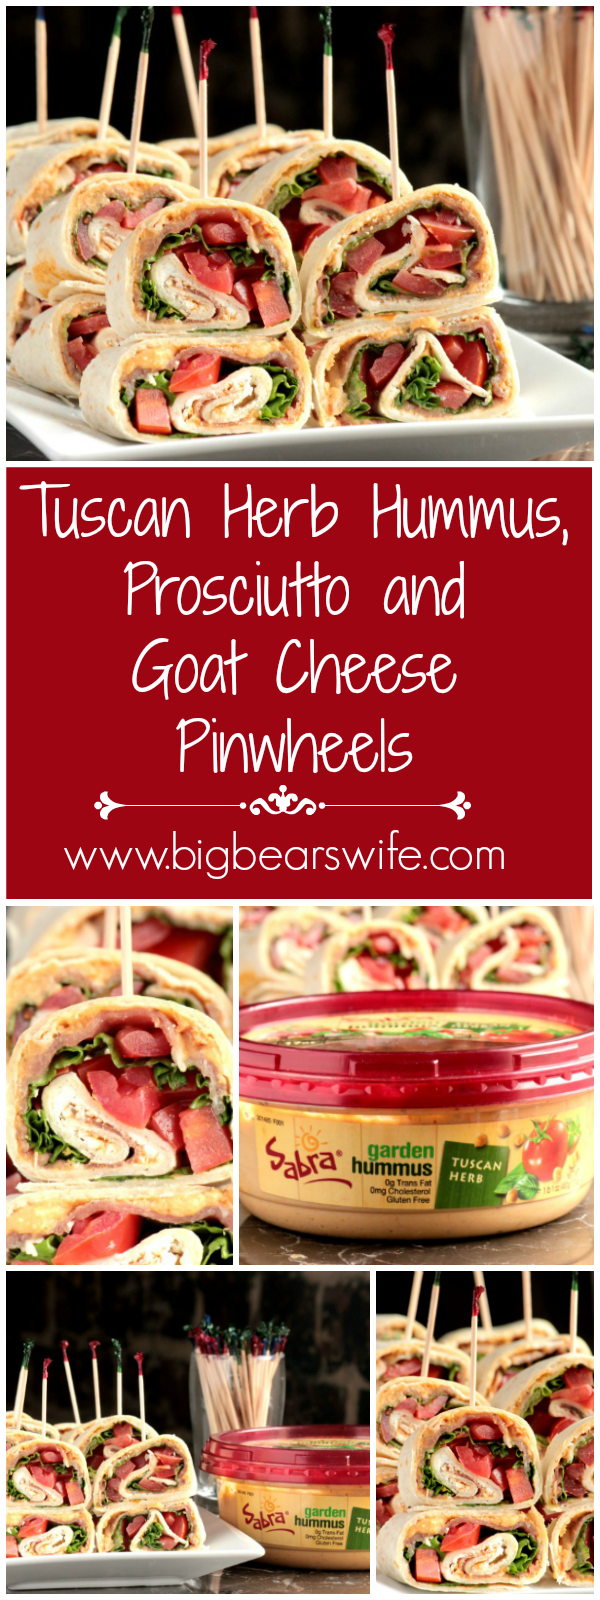 Tuscan Herb Hummus, Prosciutto and Goat Cheese Pinwheels